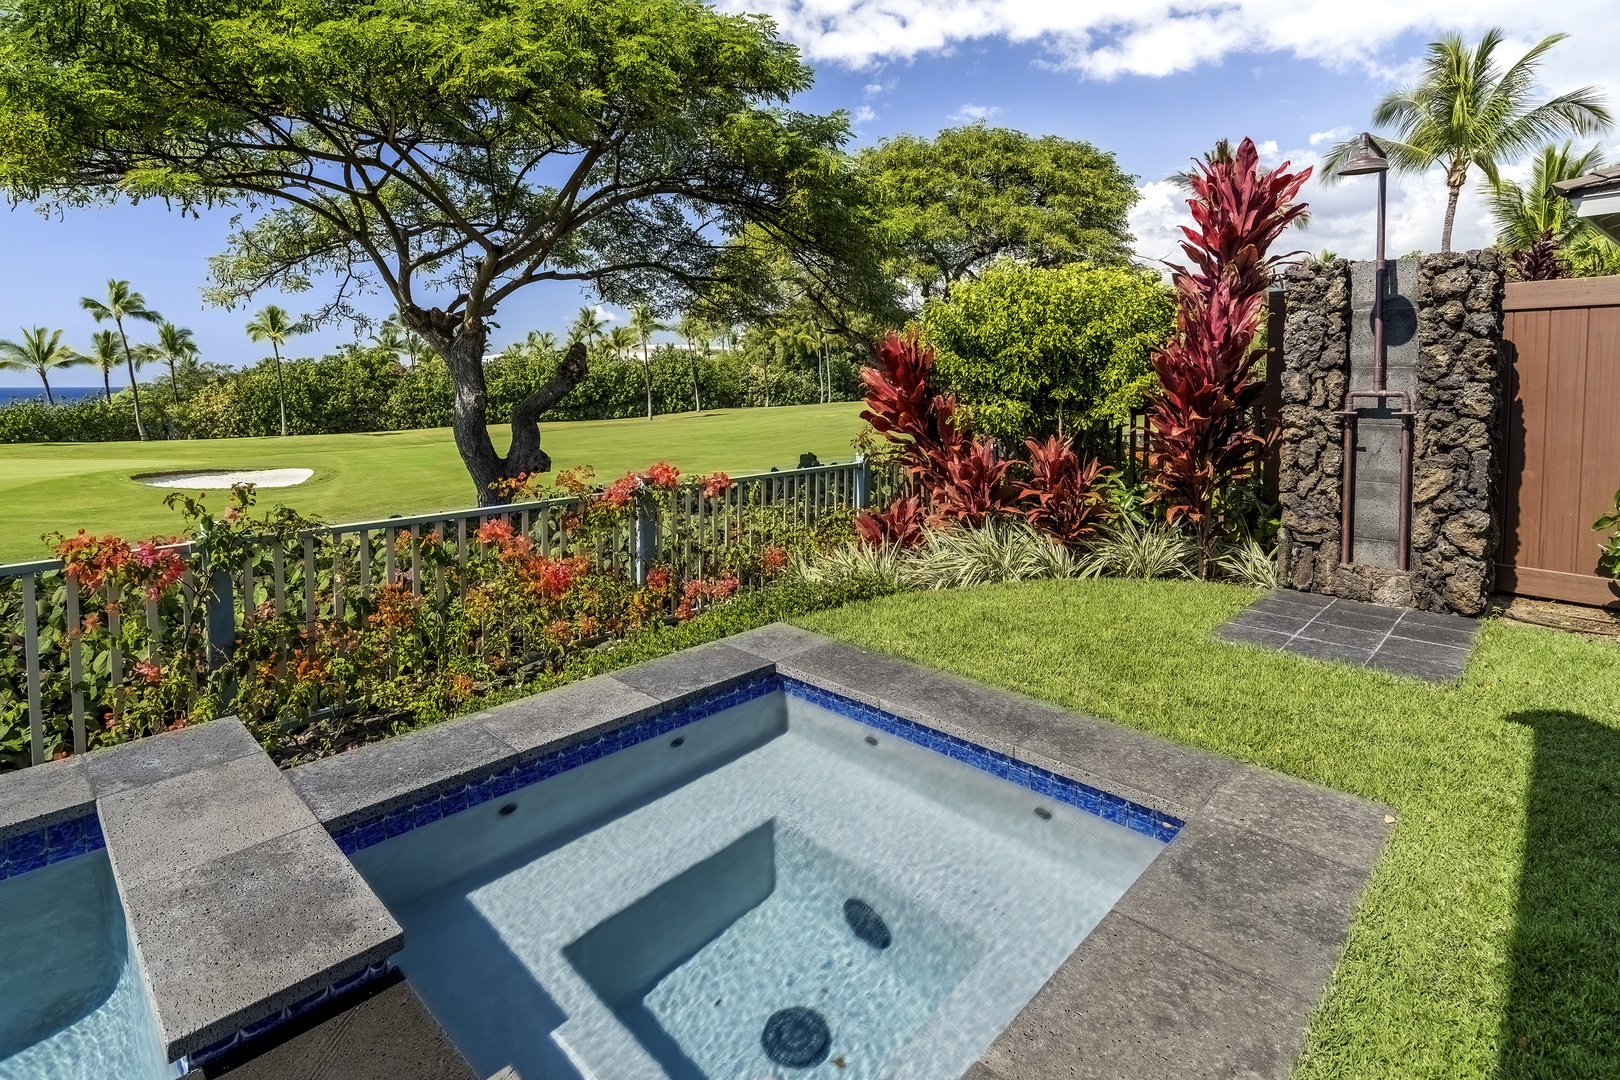 Kailua-Kona Vacation Rentals, Holua Kai #26 - Private hot tub for your enjoyment!